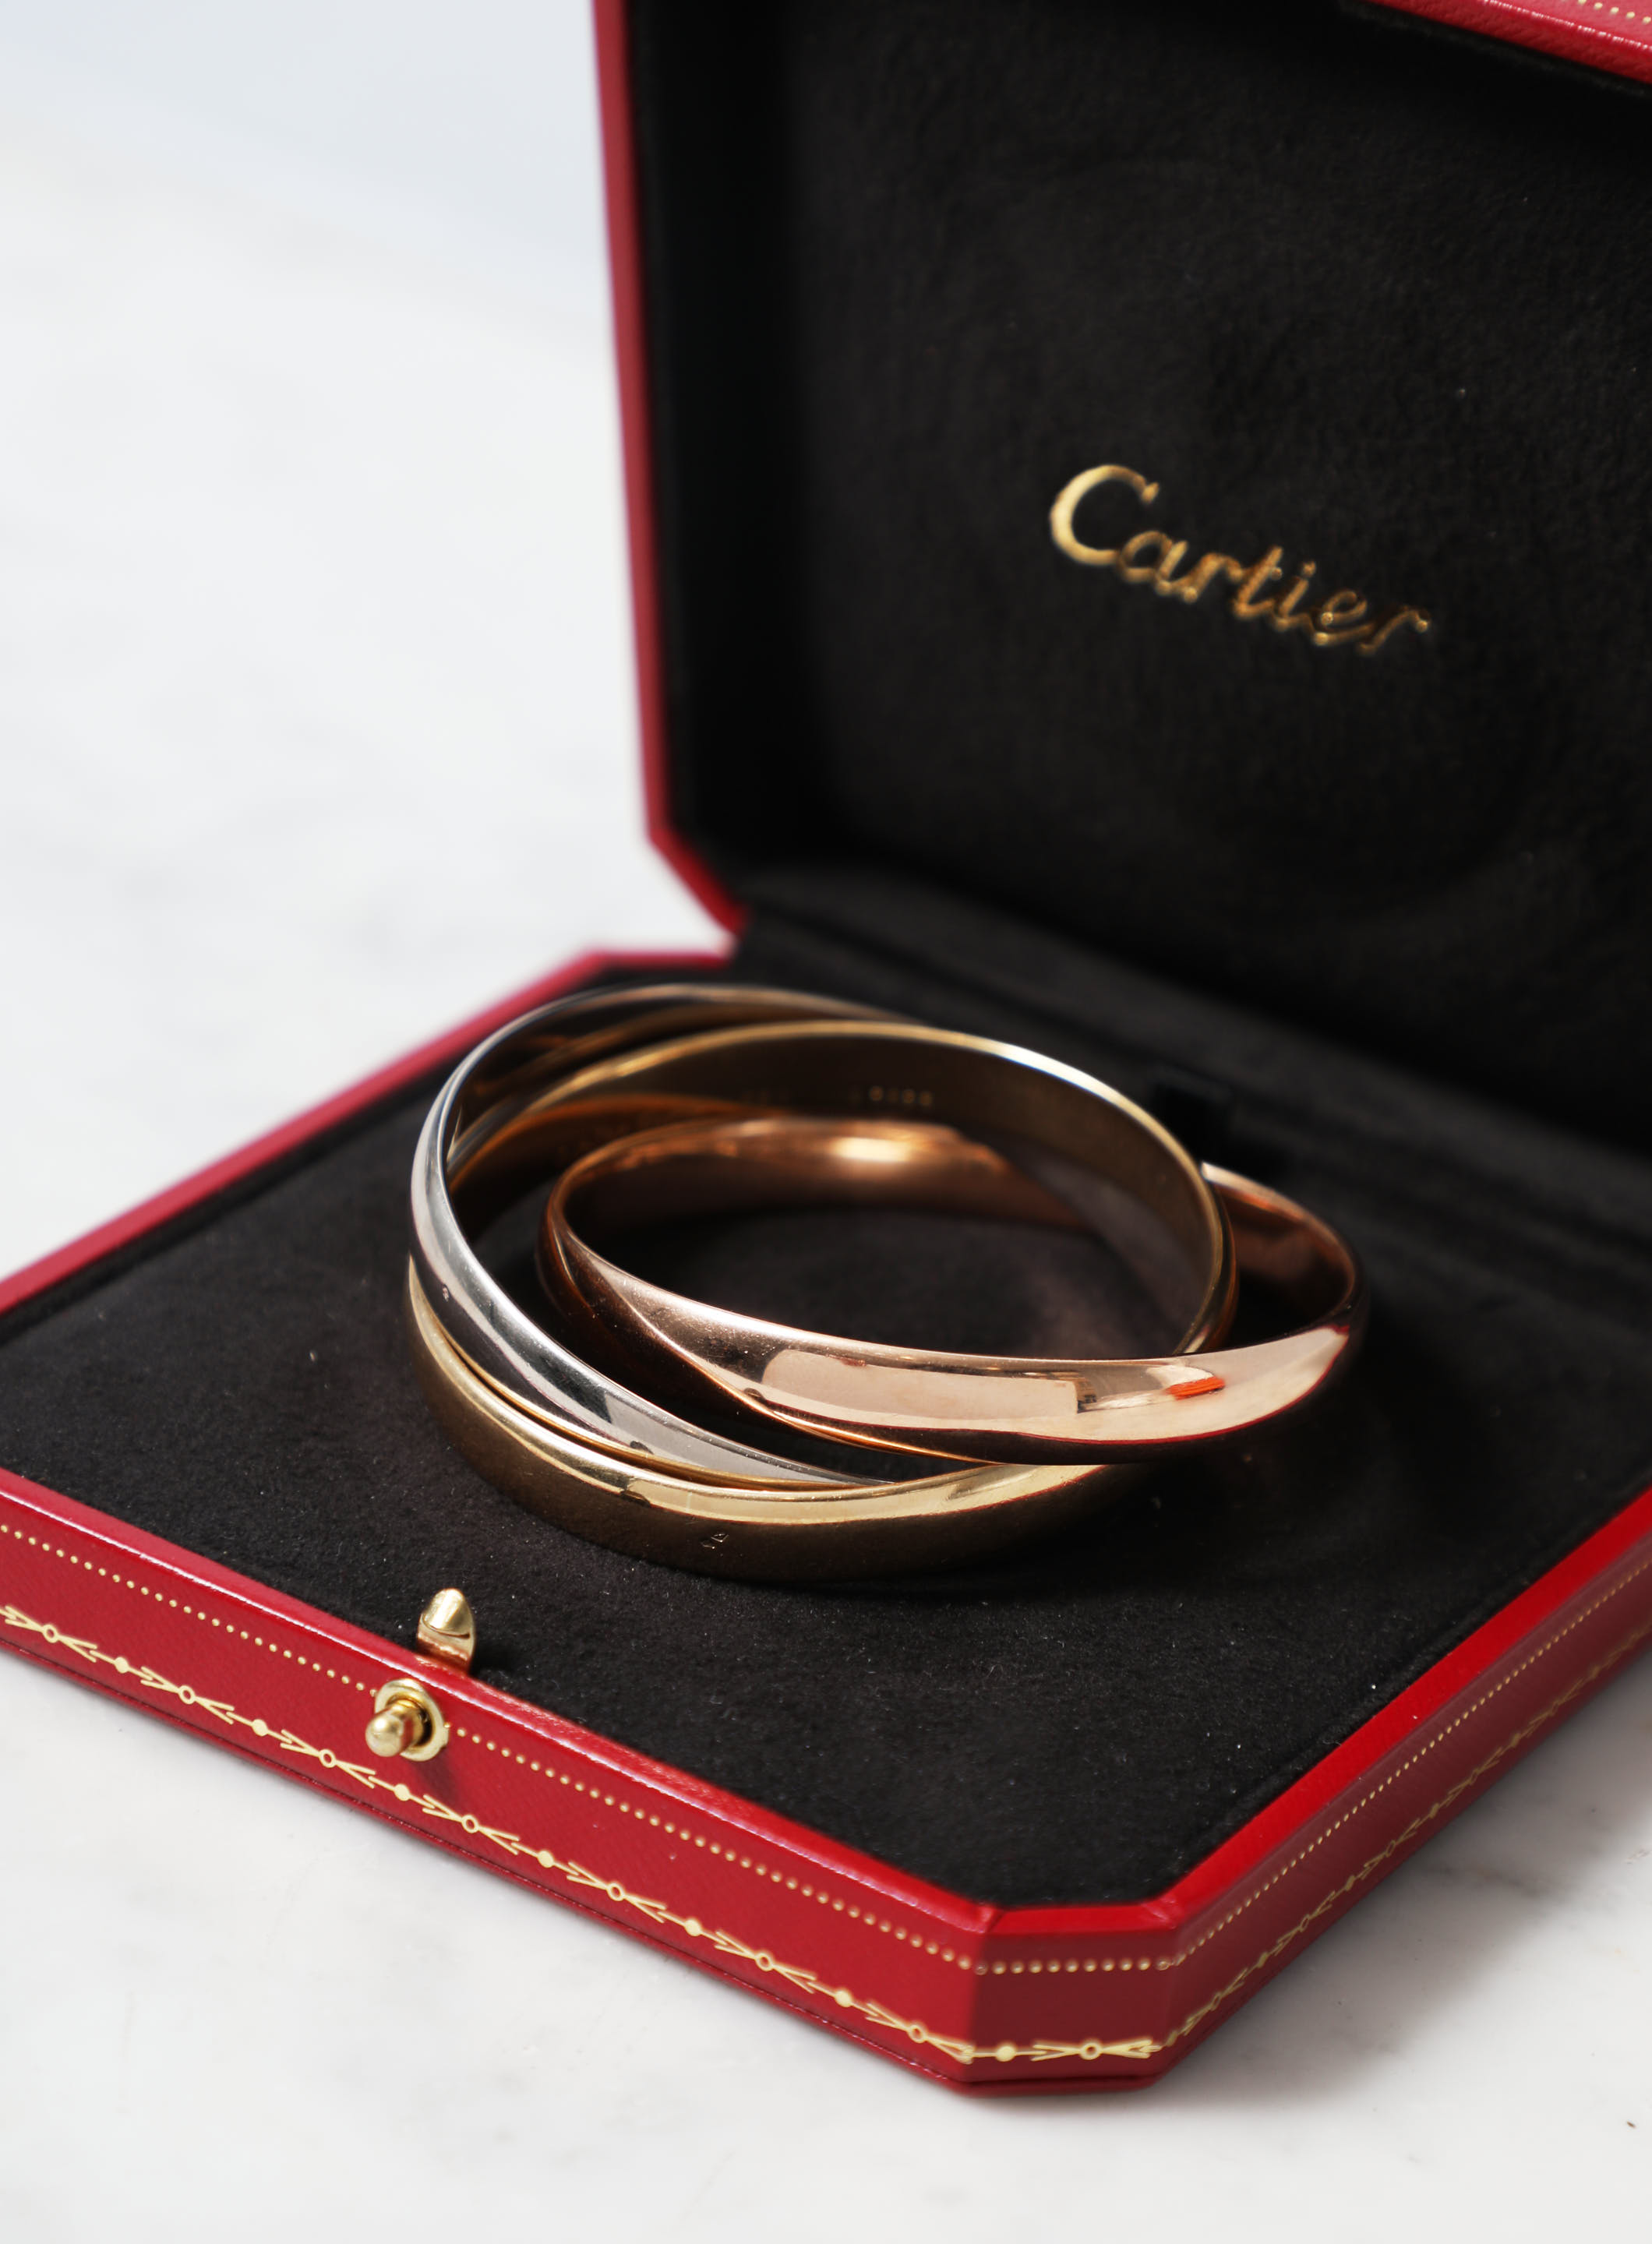 Cartier 'Trinity de Cartier' Bangle Bracelet, Large Width Model